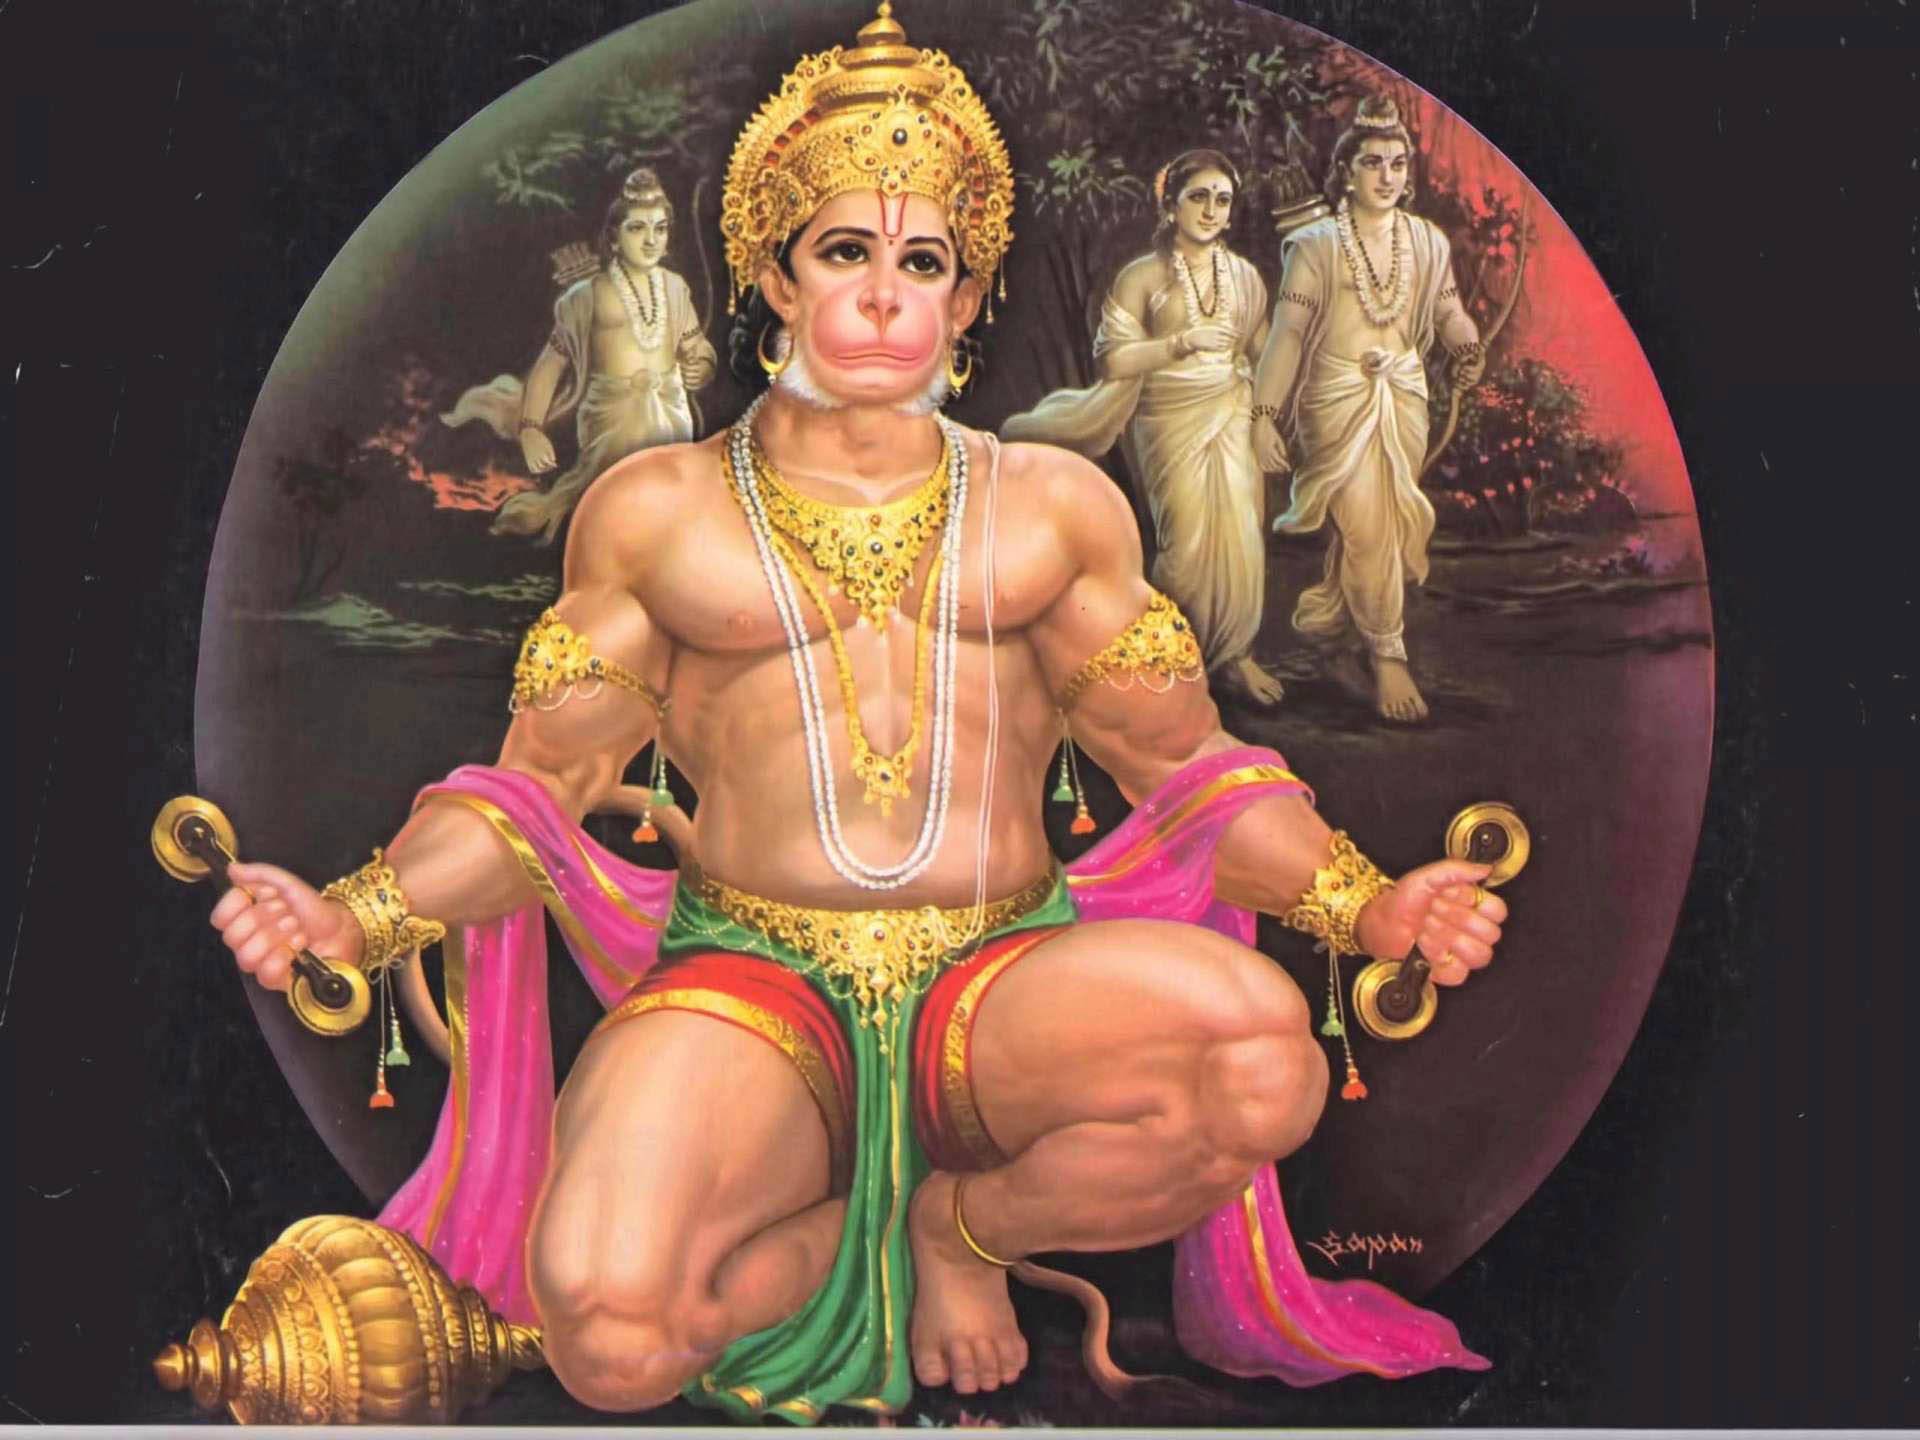 God Shree Ram Sita Laxman Hanuman. Hindu Gods and Goddesses